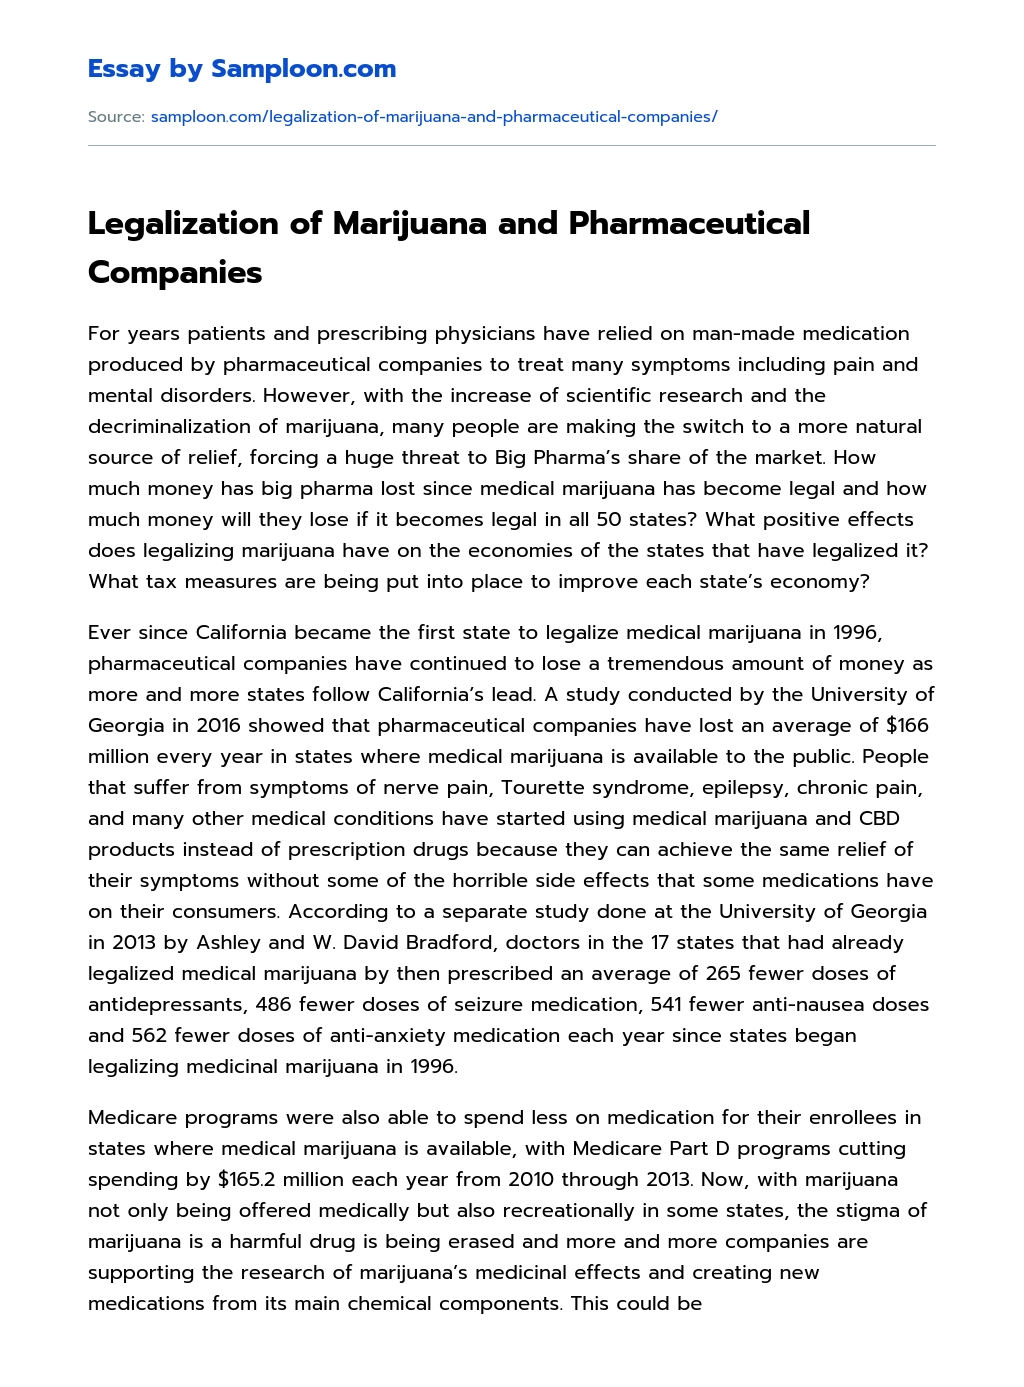 Legalization of Marijuana and Pharmaceutical Companies essay